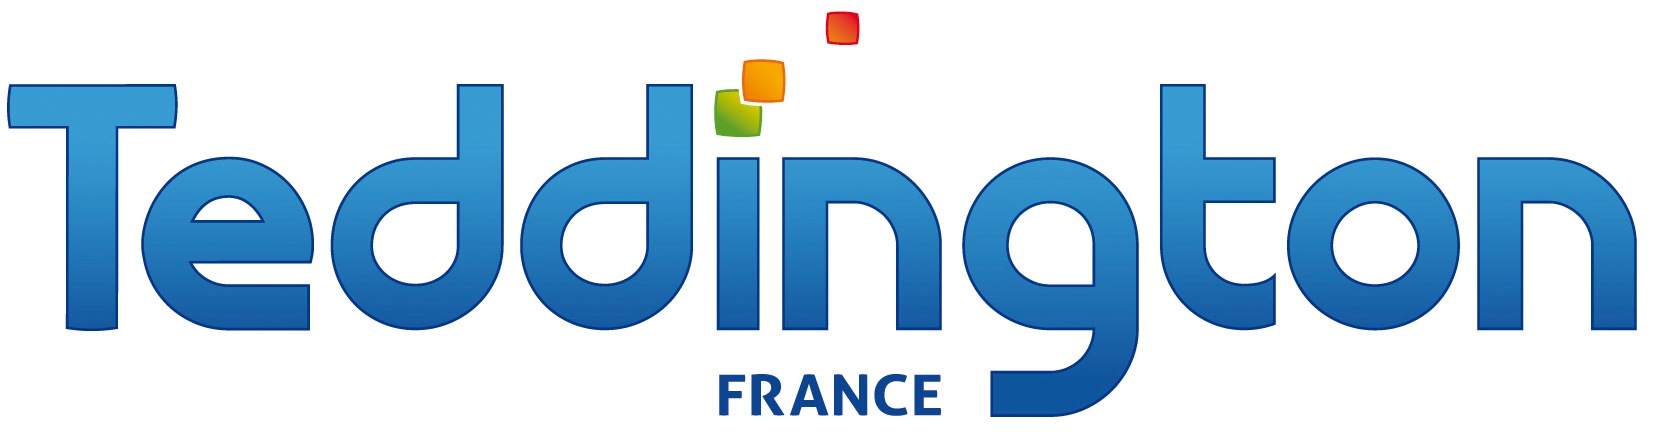 Teddington France Logo